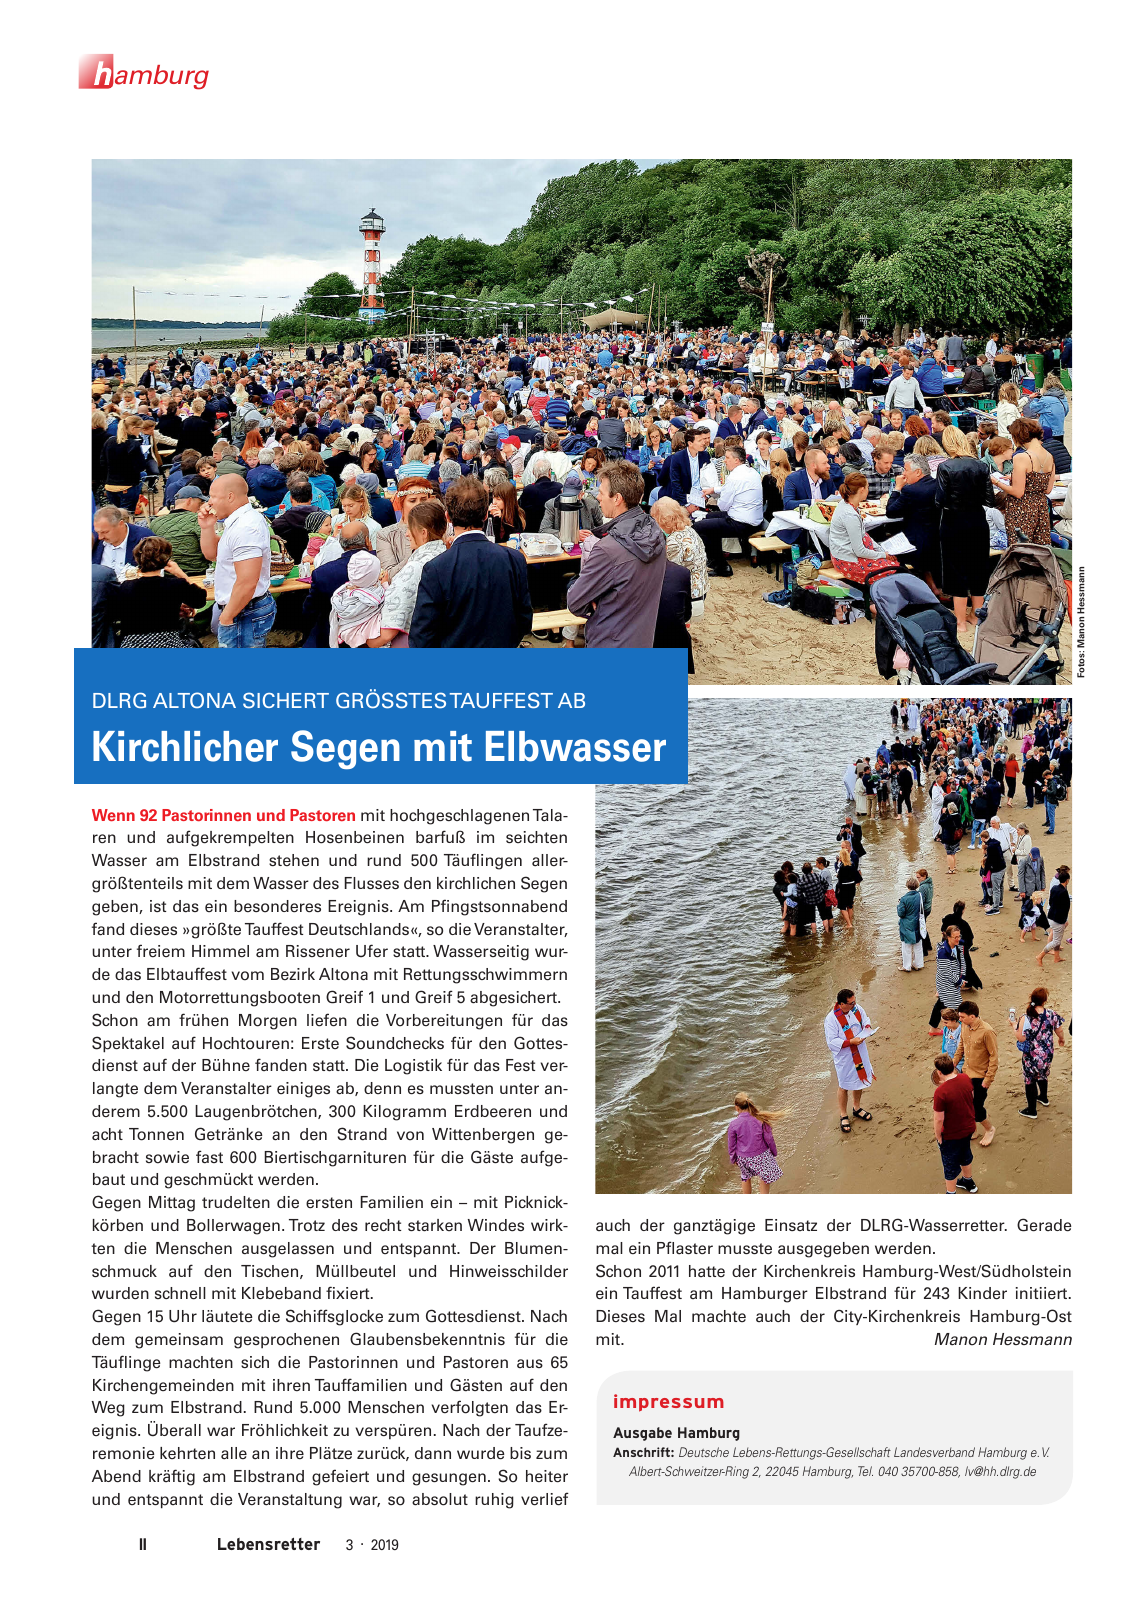 Vorschau Lebensretter 3/2019 - Hamburg Regionalausgabe Seite 4